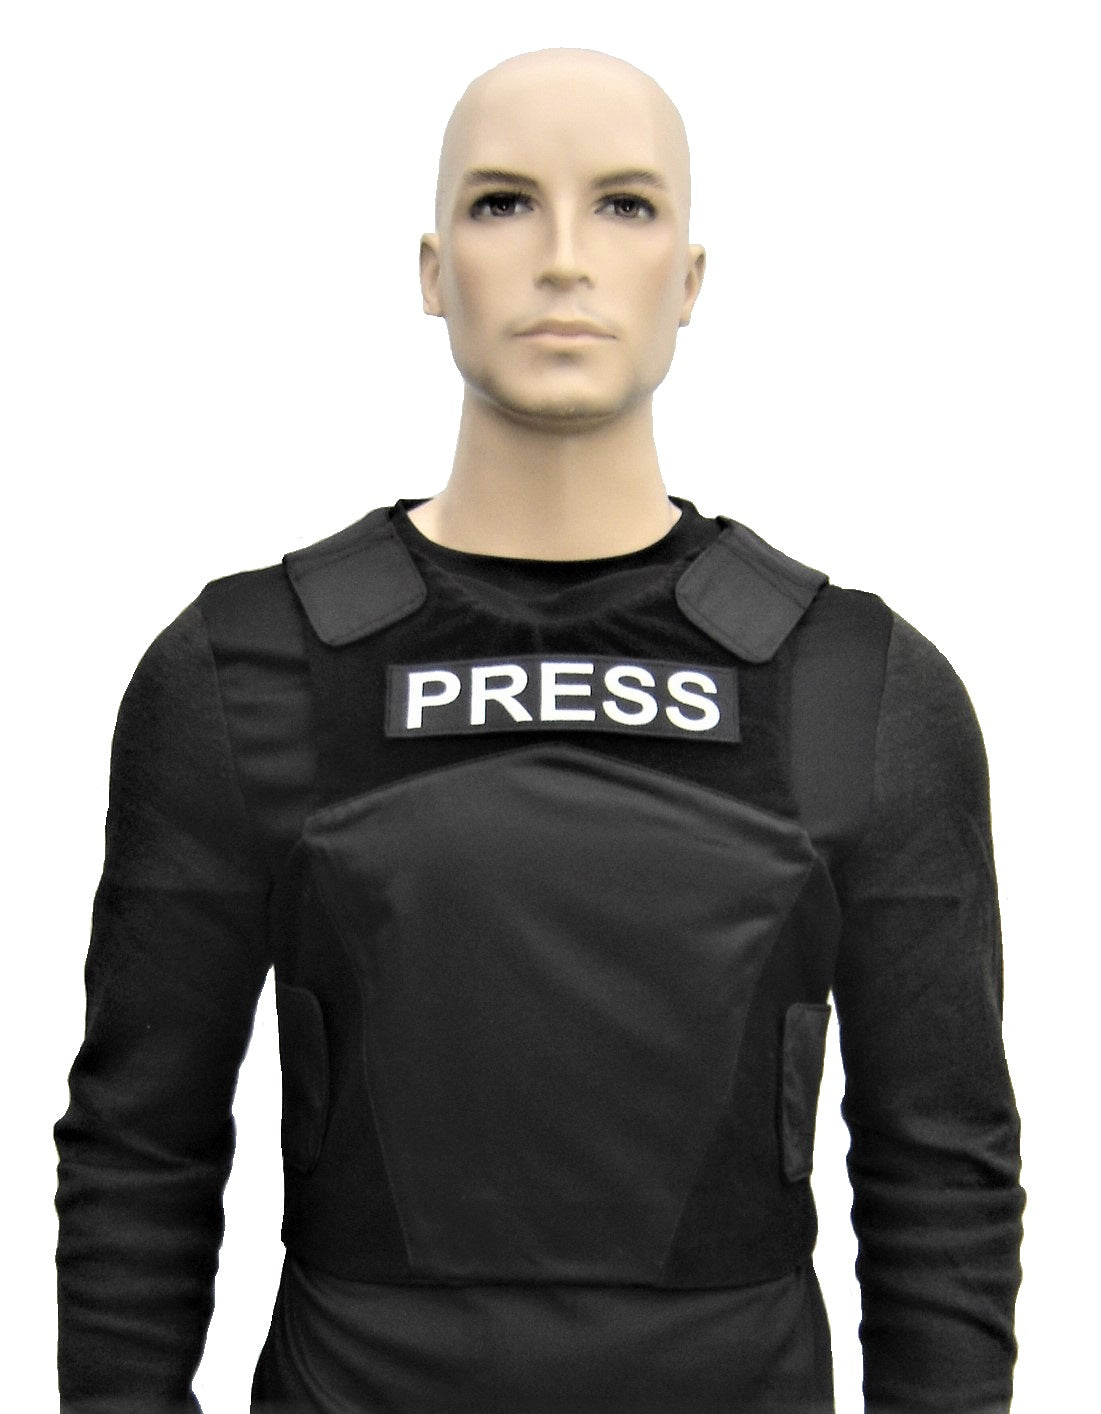 <tc>Bulletproof vest Ares NIJ 3A (04) black body armor Sioen Europe</tc>